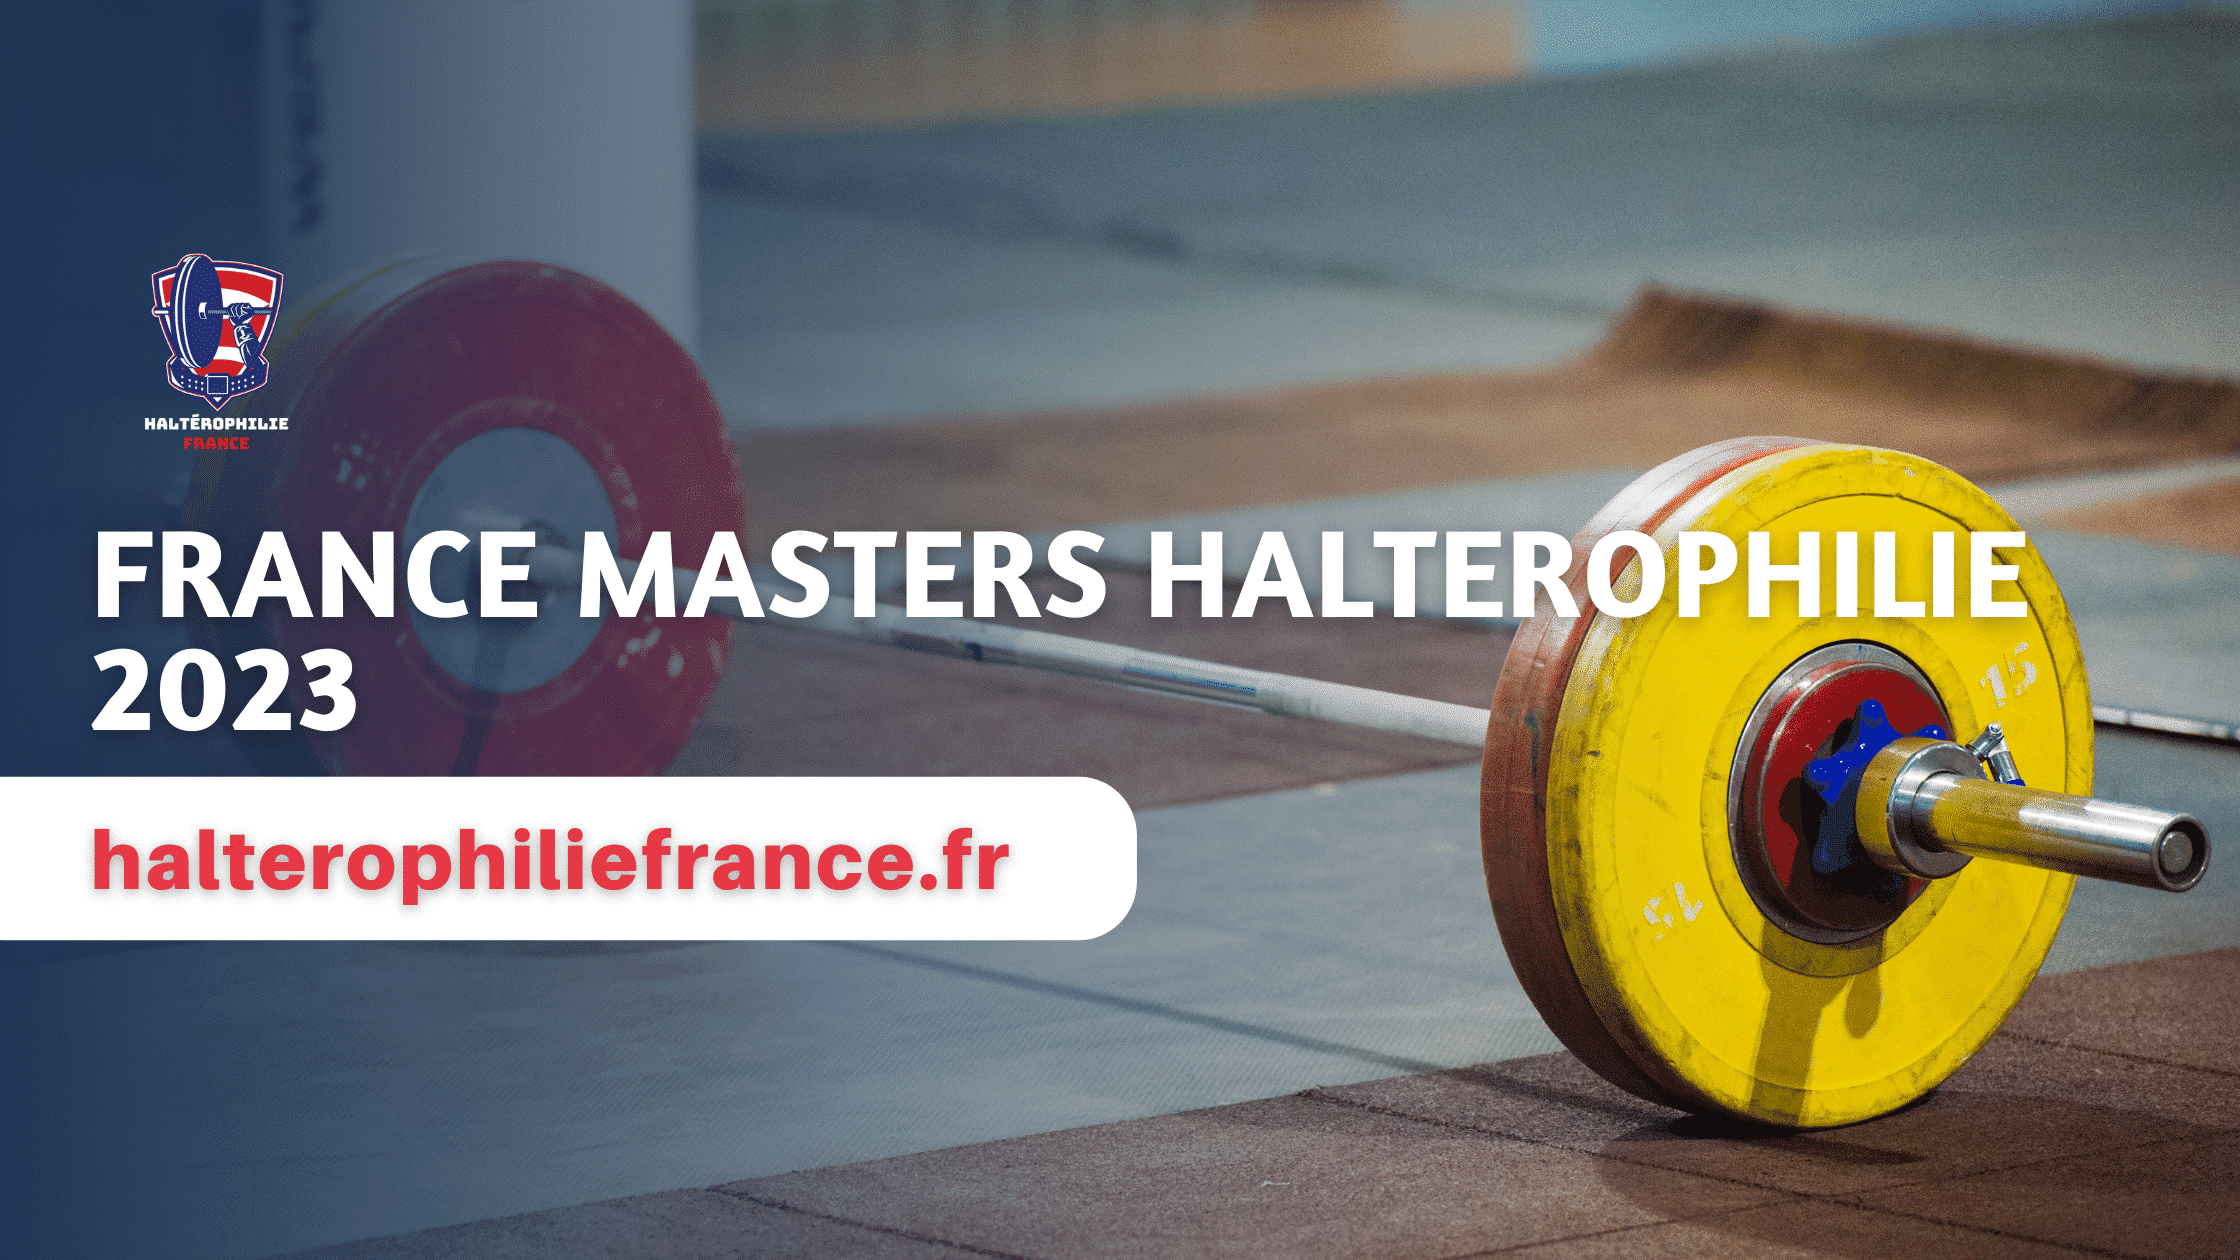 France Masters halterophilie 2023